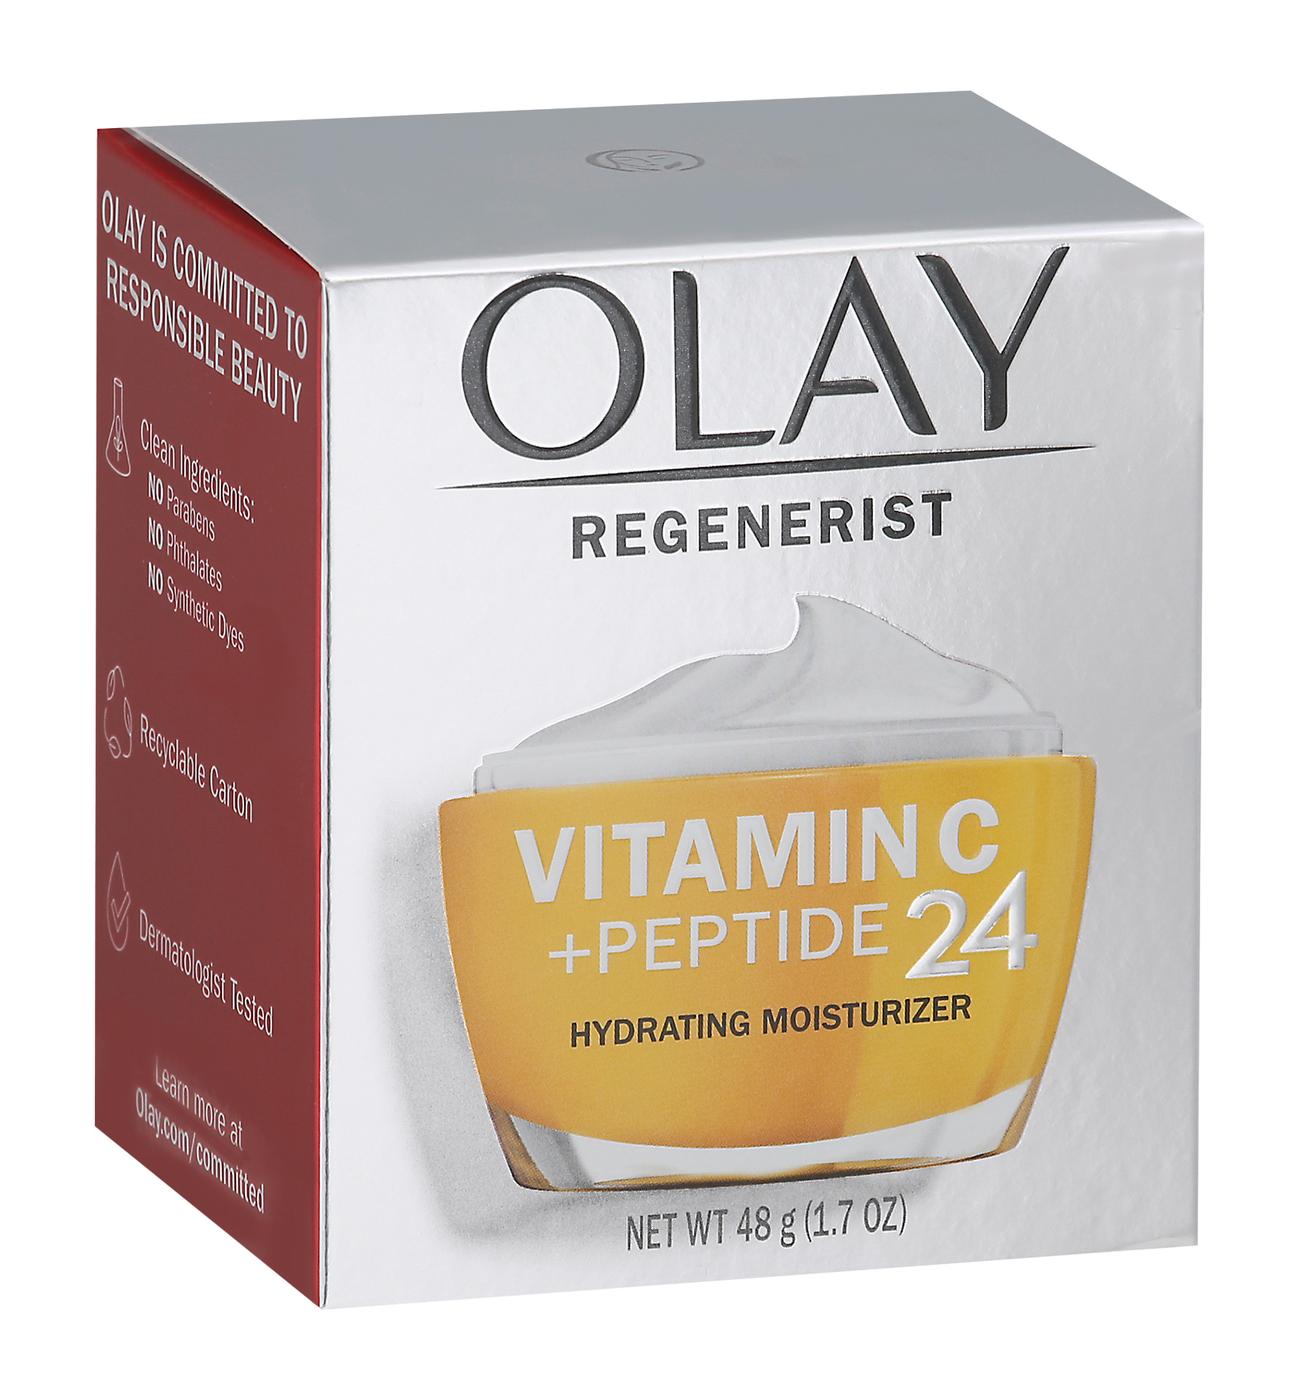 Olay Olay Regenerist Vitamin C + Peptide 24 Face Moisturizer; image 1 of 2